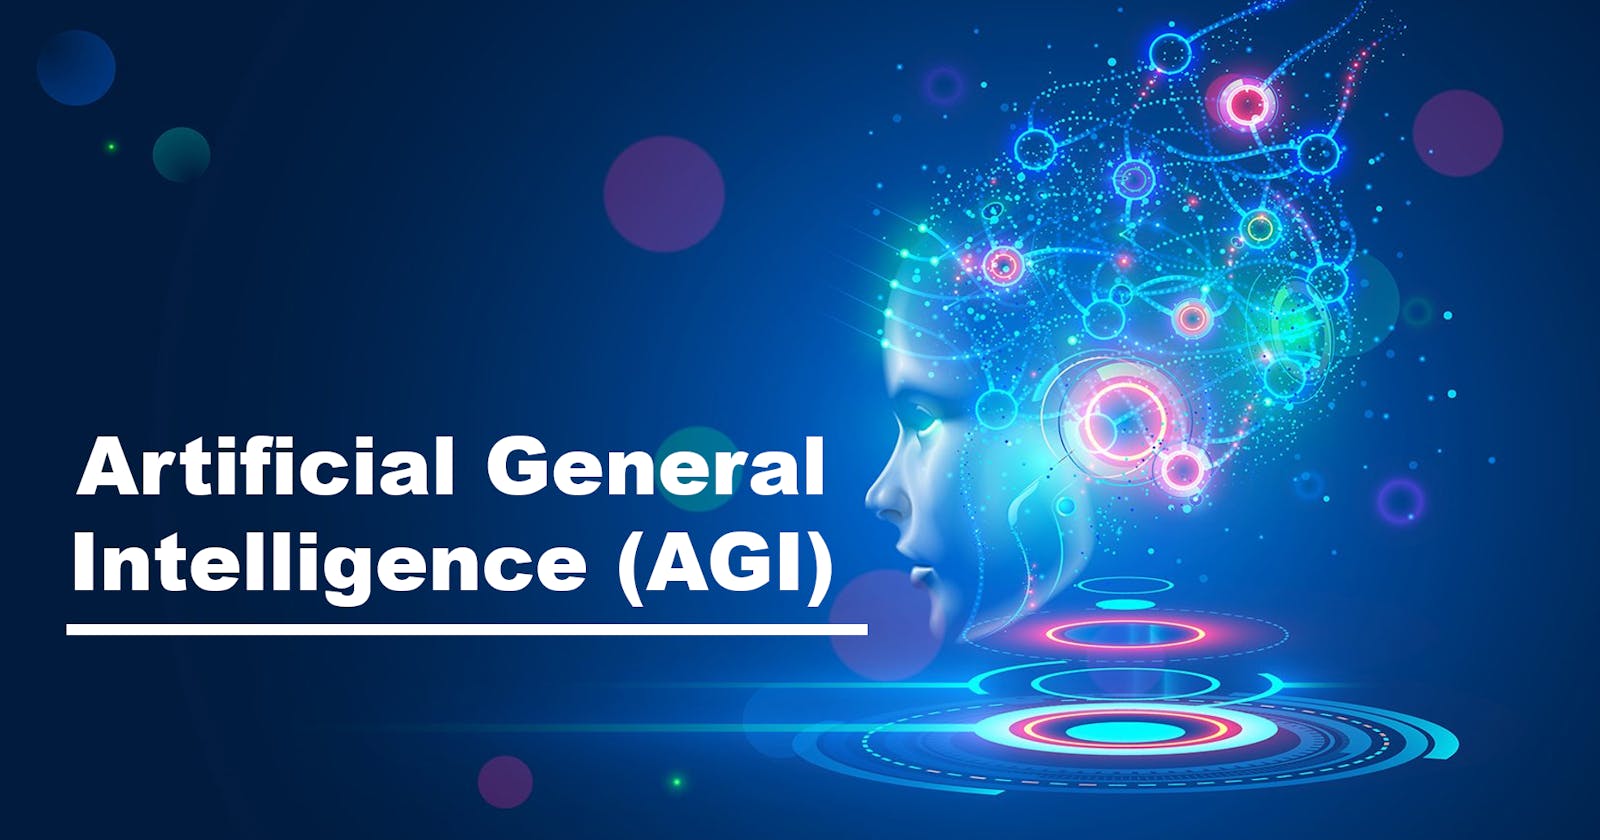 AGI (Artificial General Intelligence)